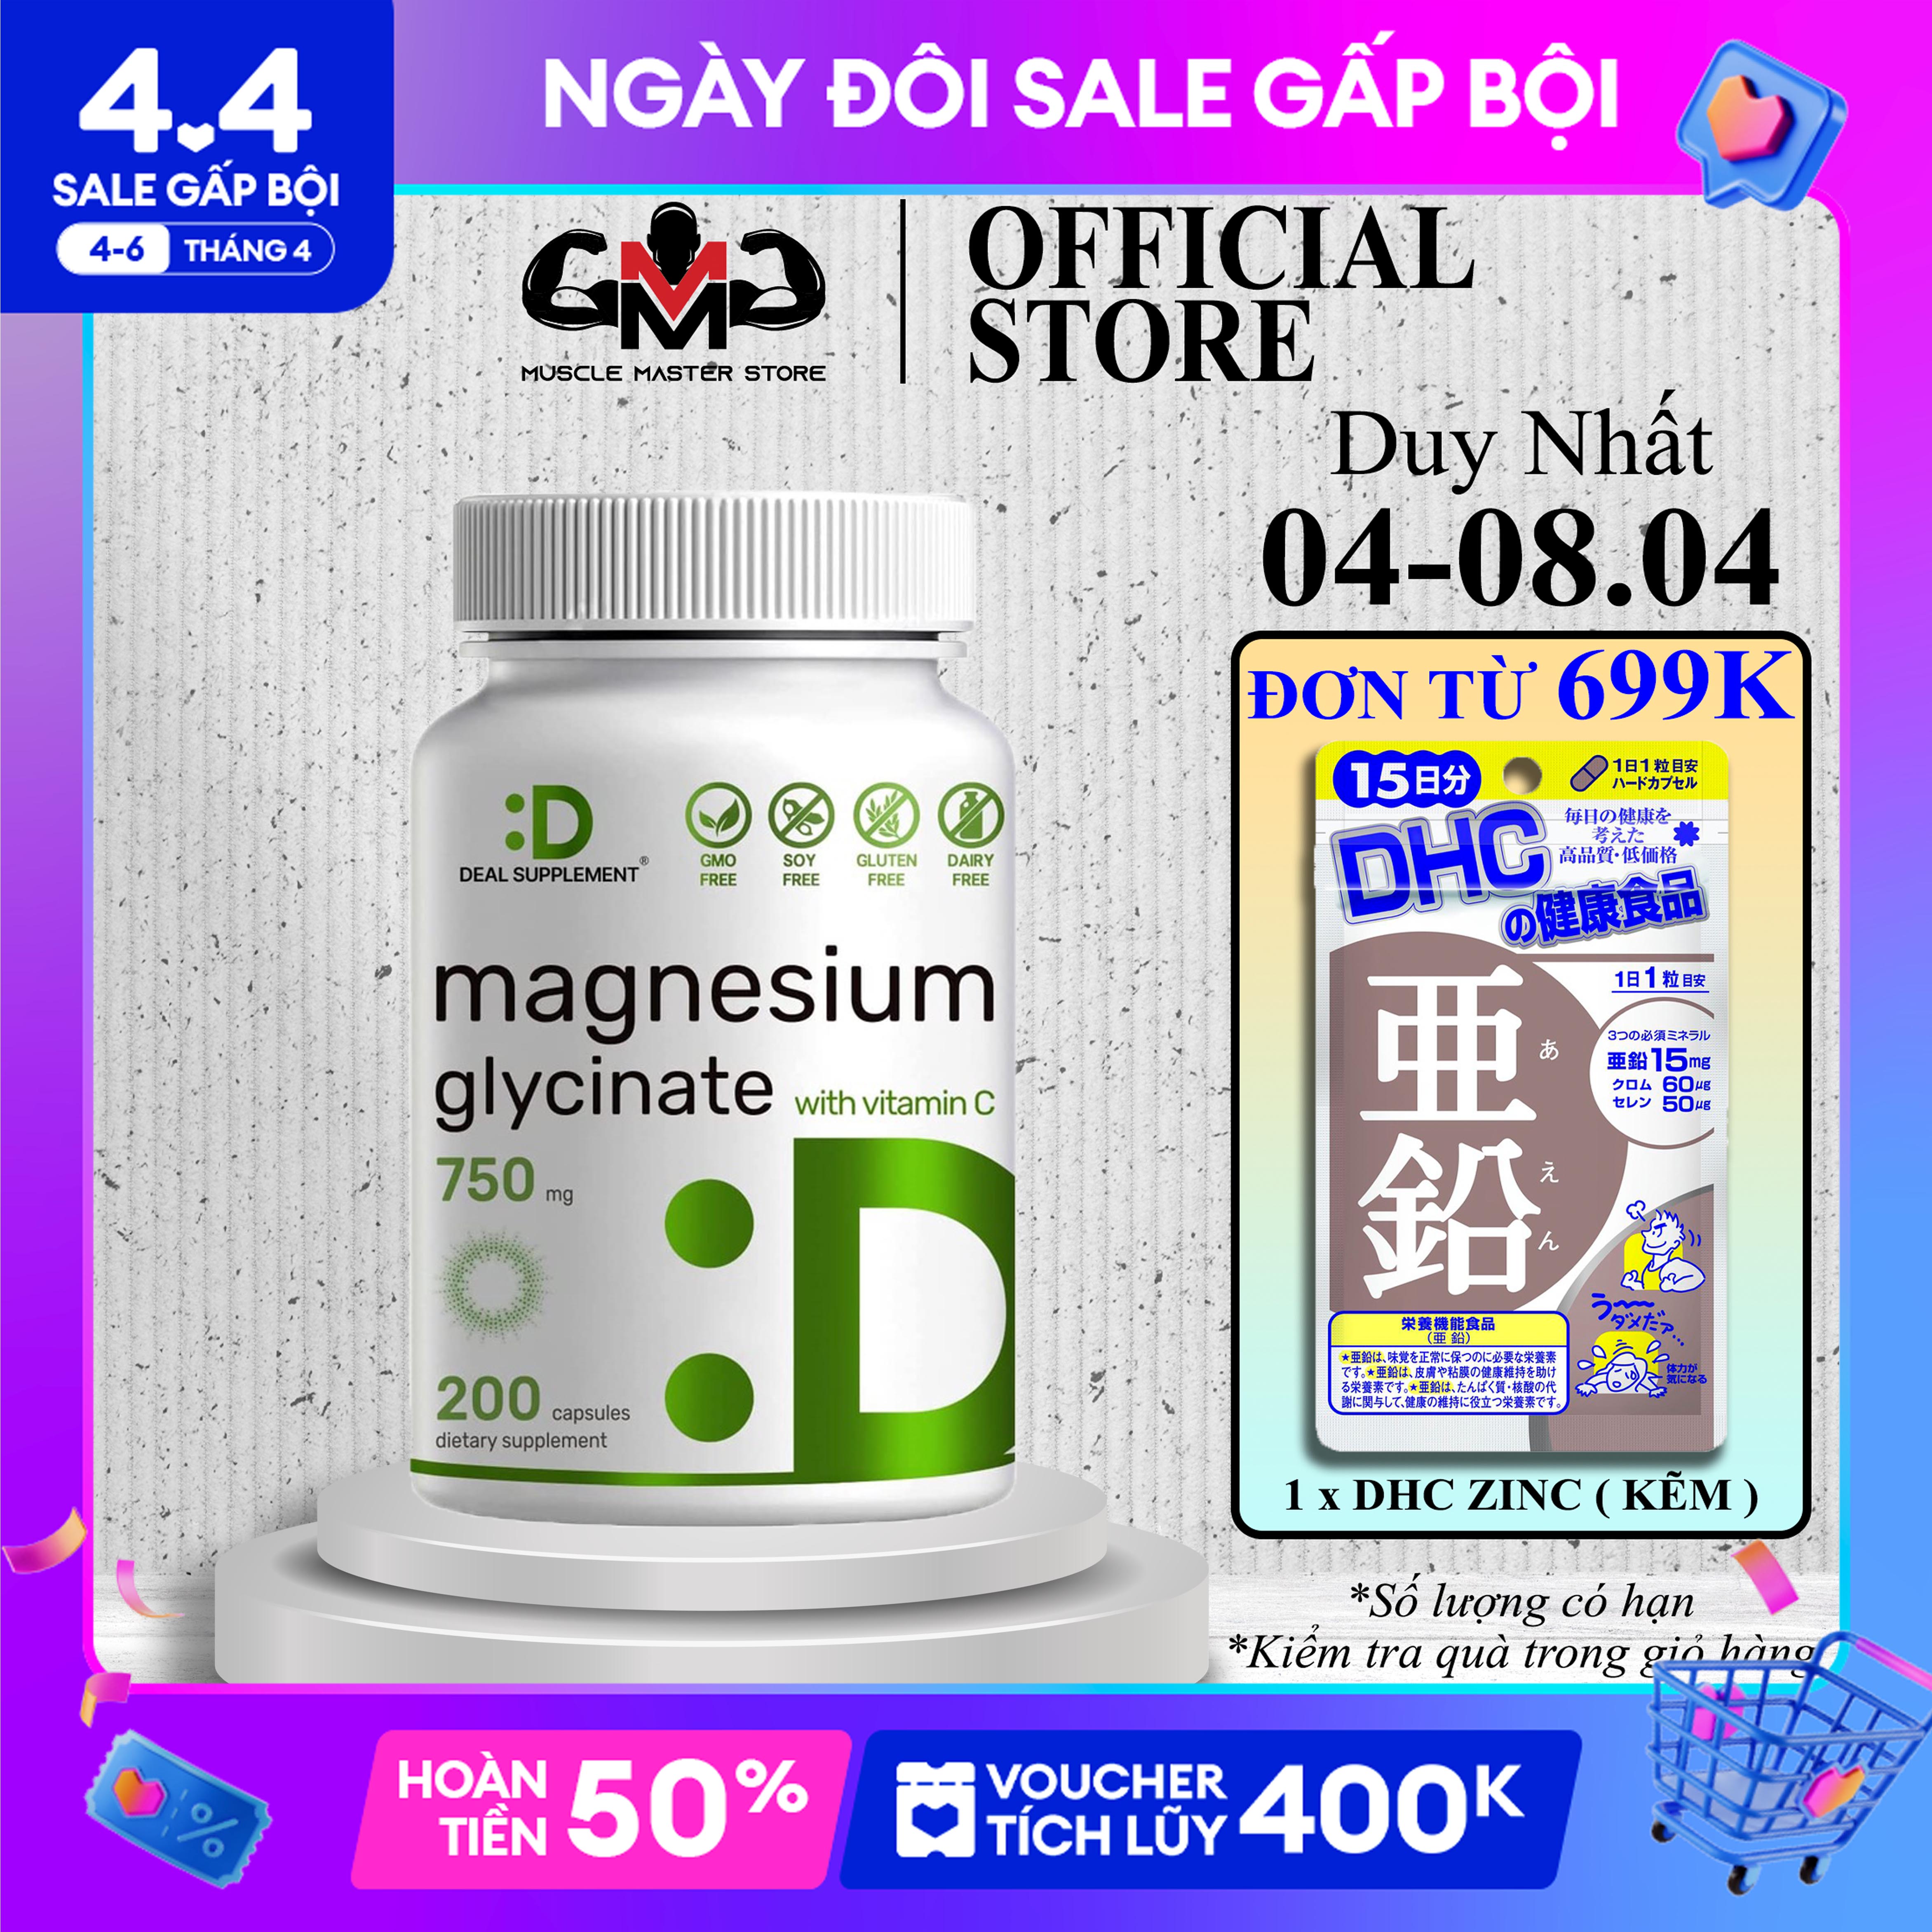 Viên Uống Magie và Vitamin C Deal Supplement Magnesium Glycinate + Vitamin